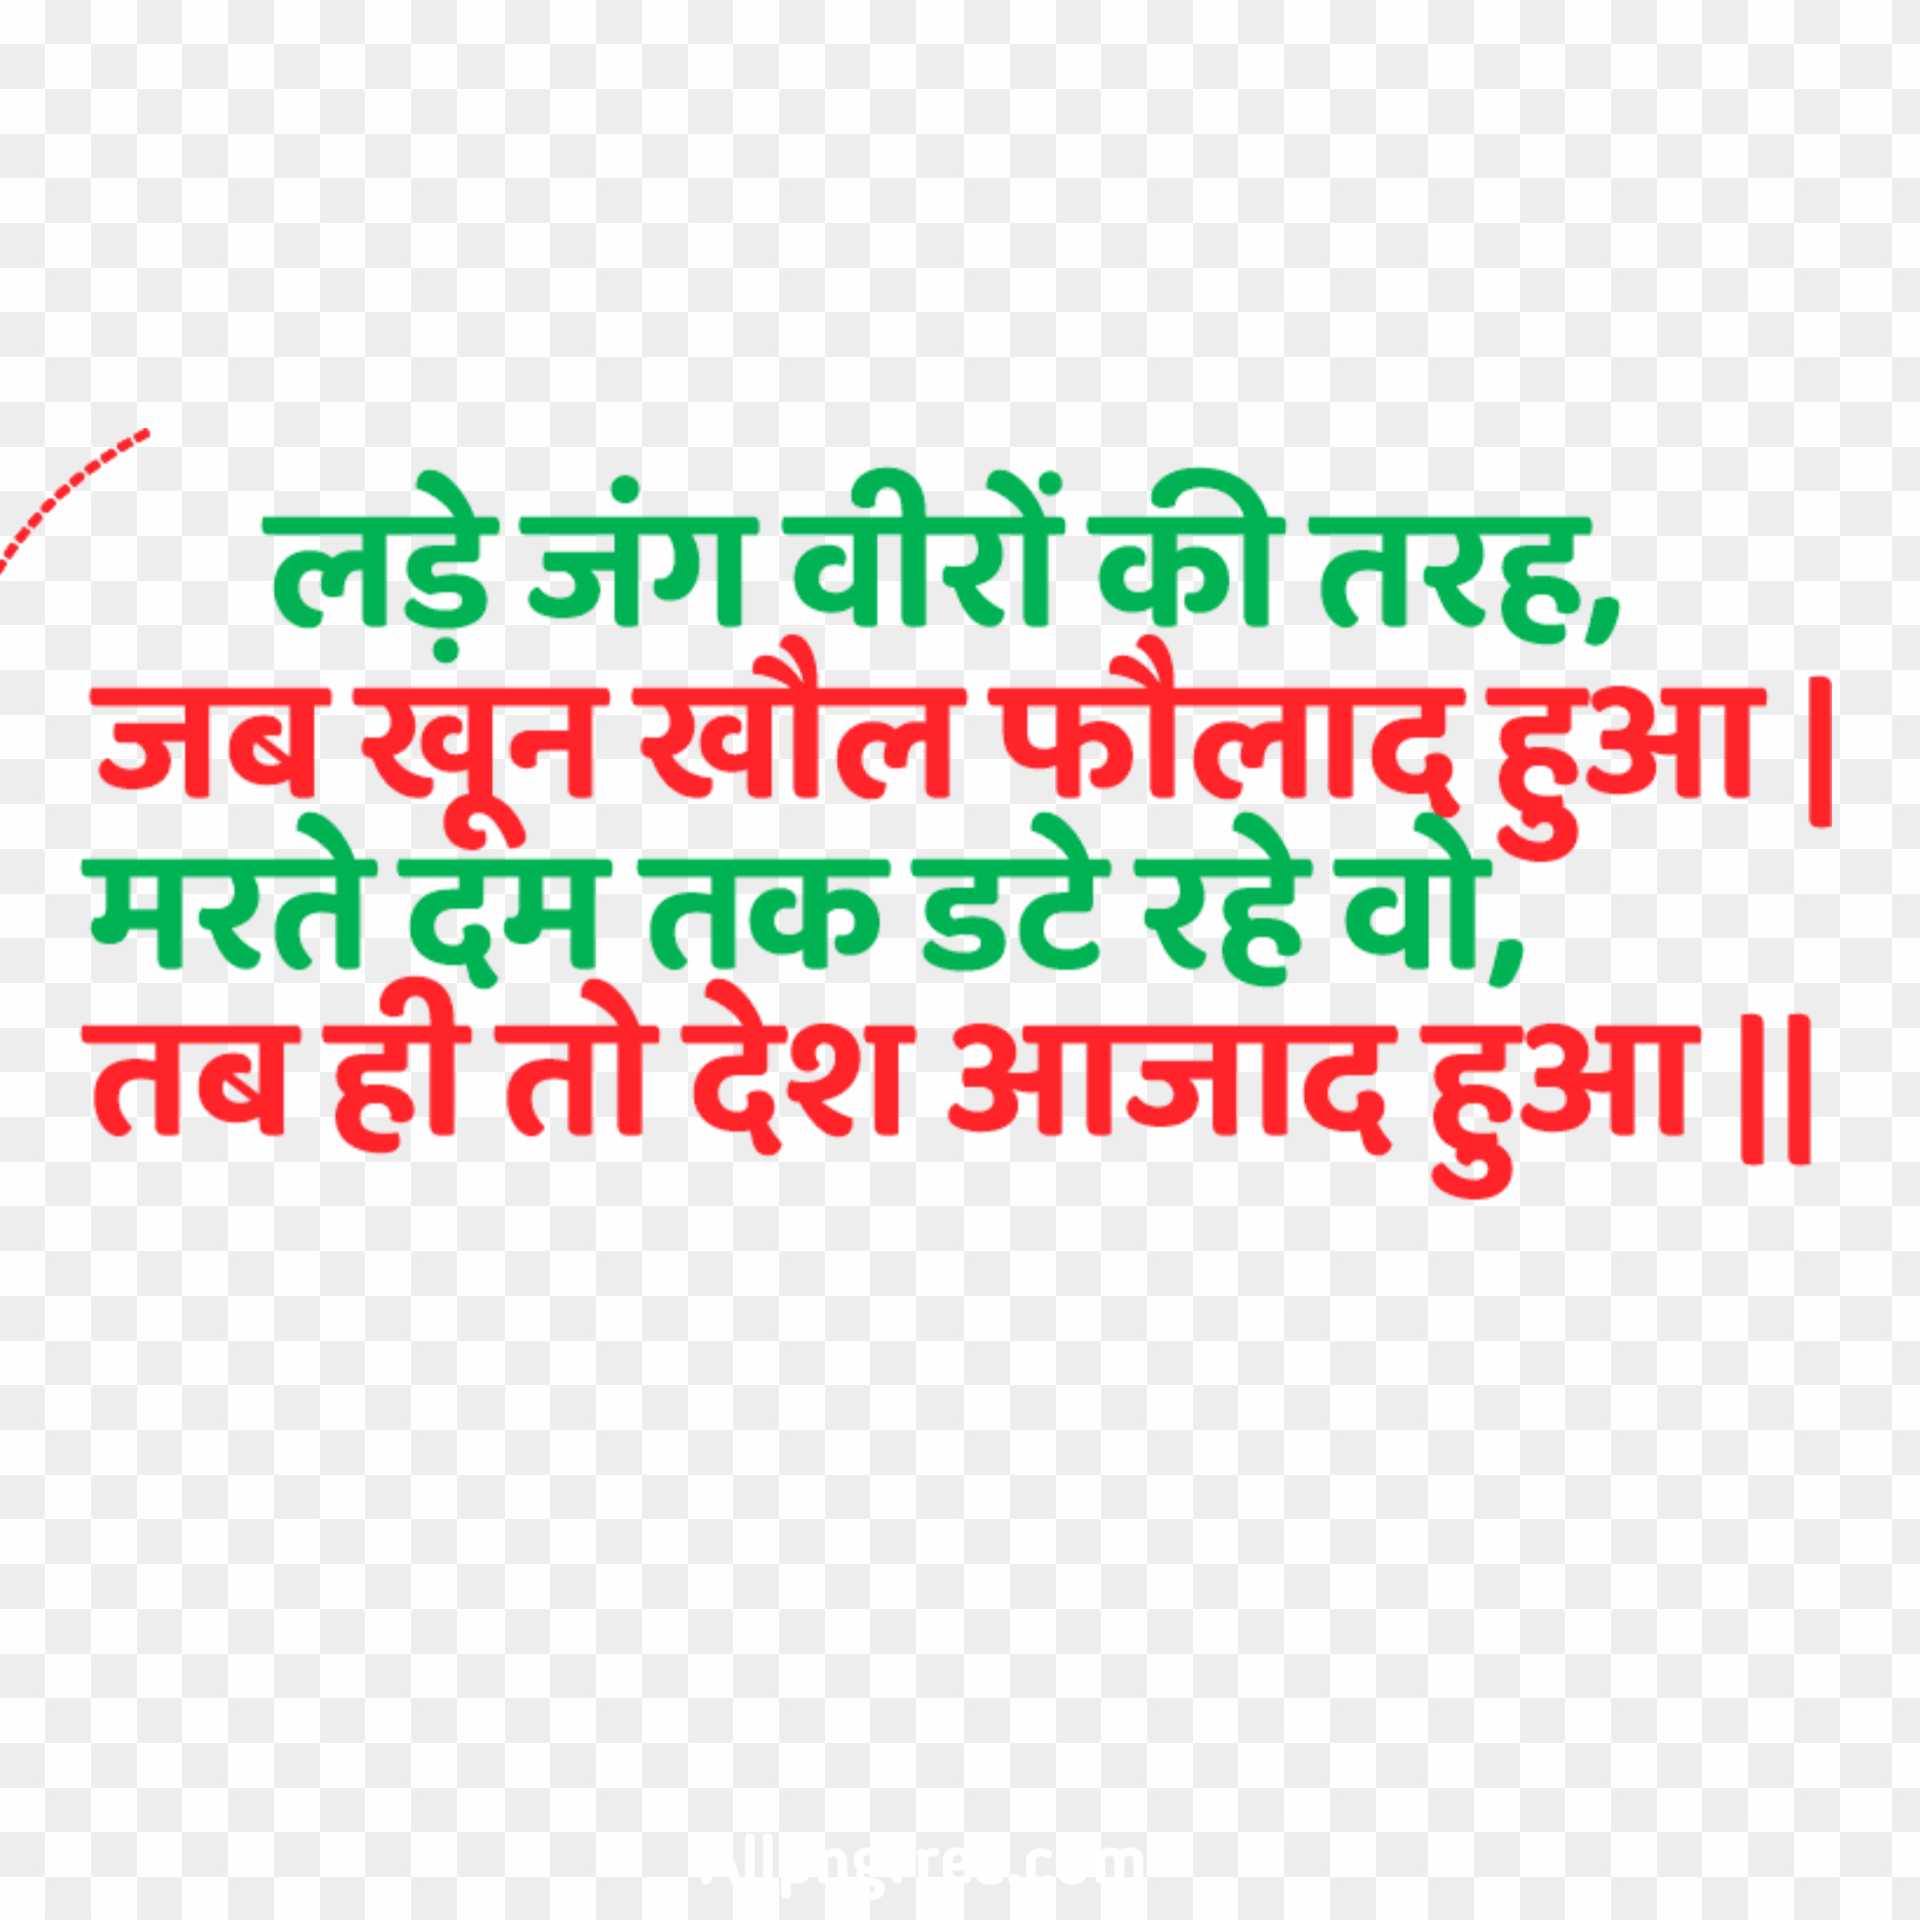 Indian desh bhakti quotes in Hindi